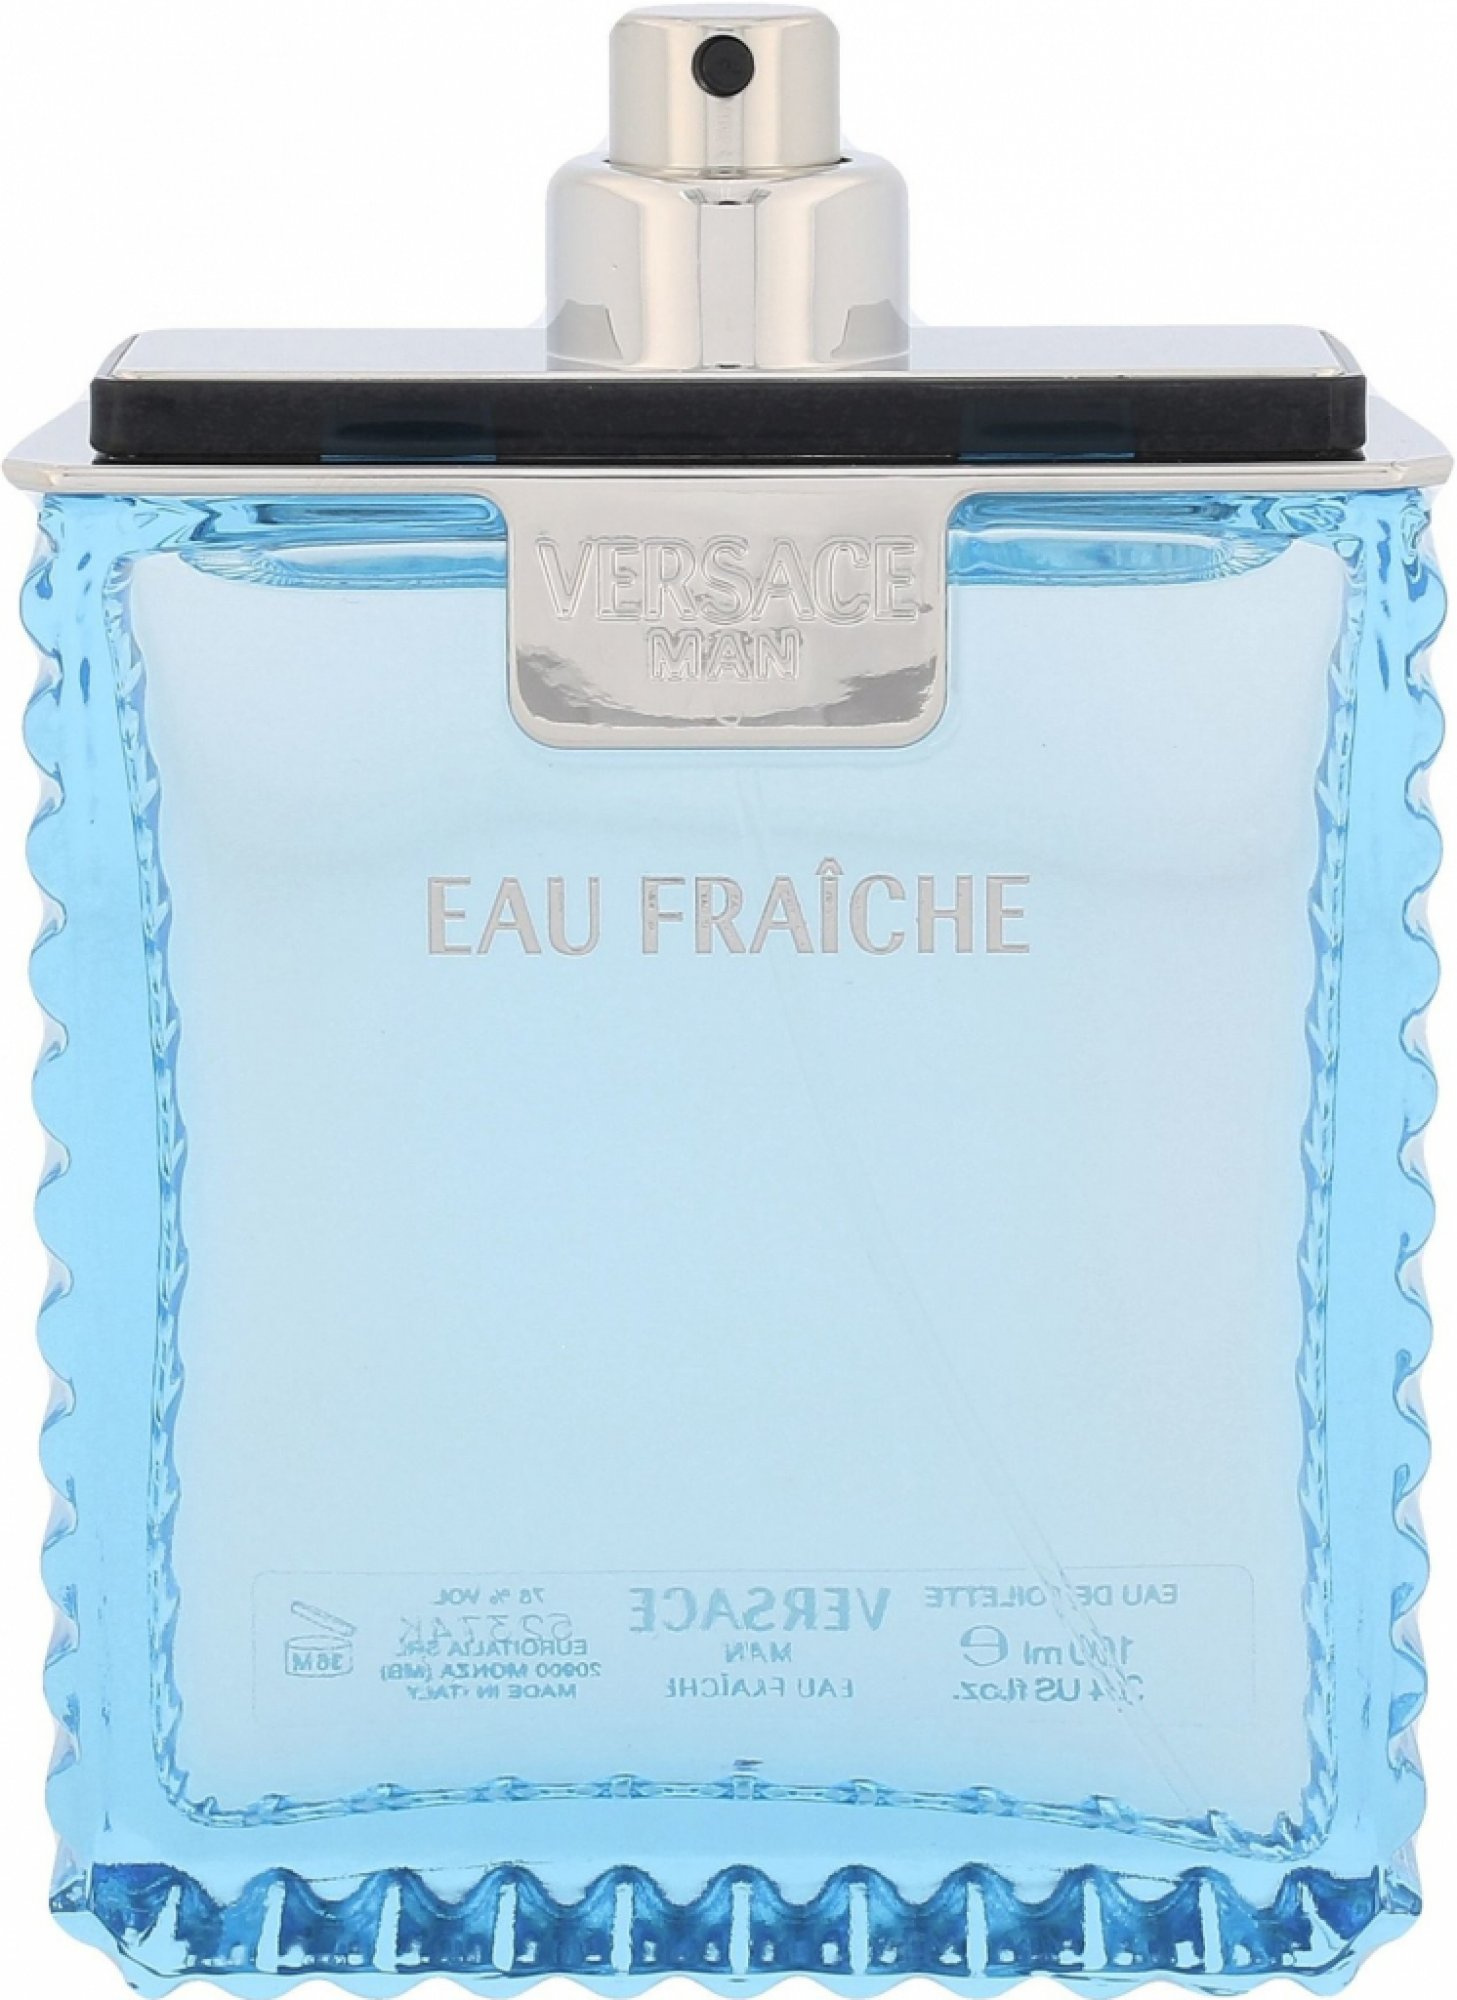 Versace Eau Fraiche Man toaletní voda pro muže 100ml tester